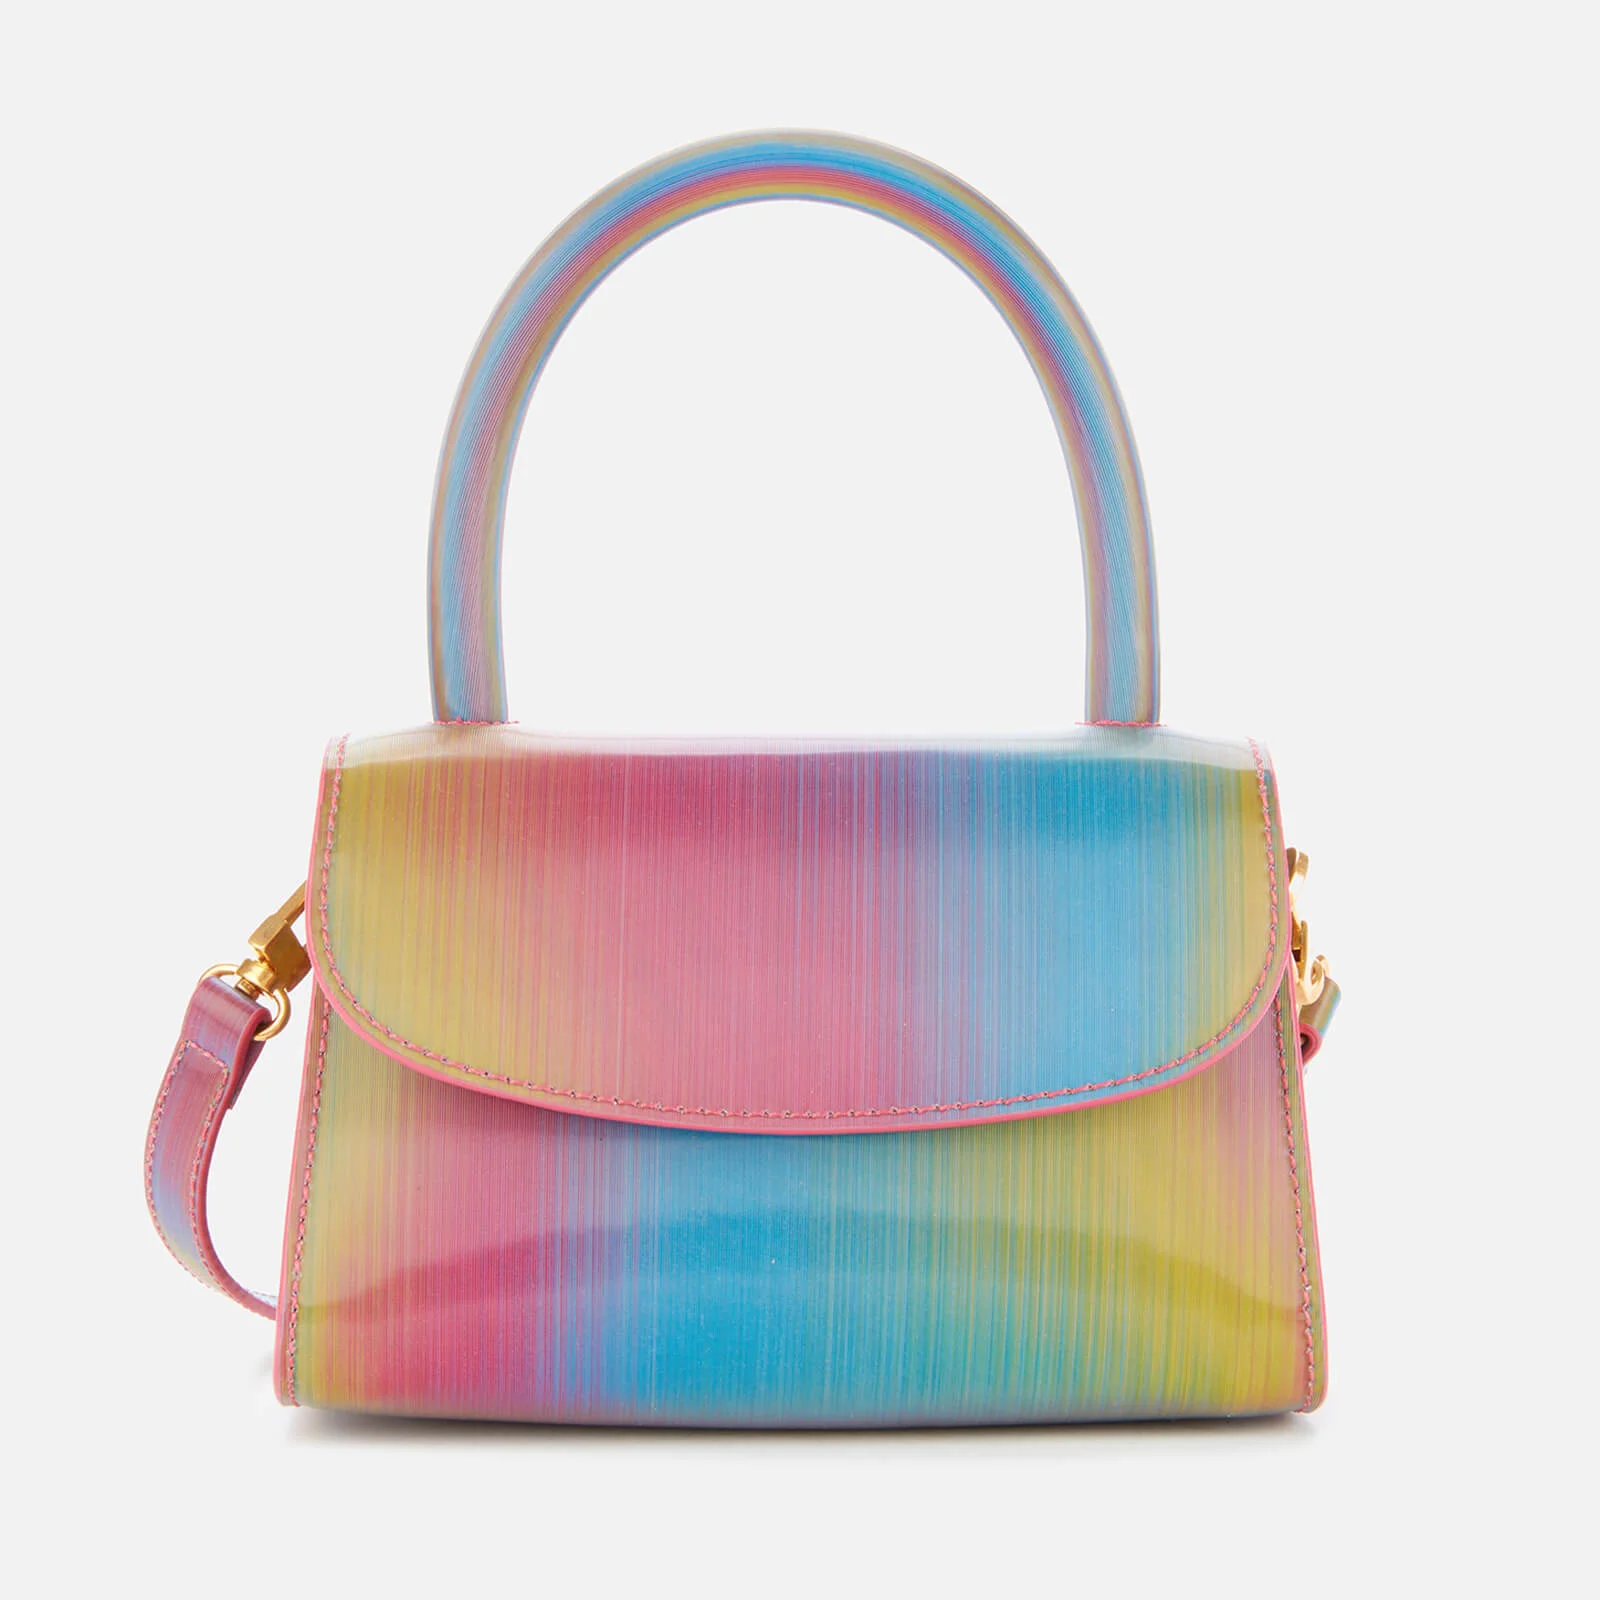 BY FAR Women's Mini Top Handle Bag - Rainbow Image 1